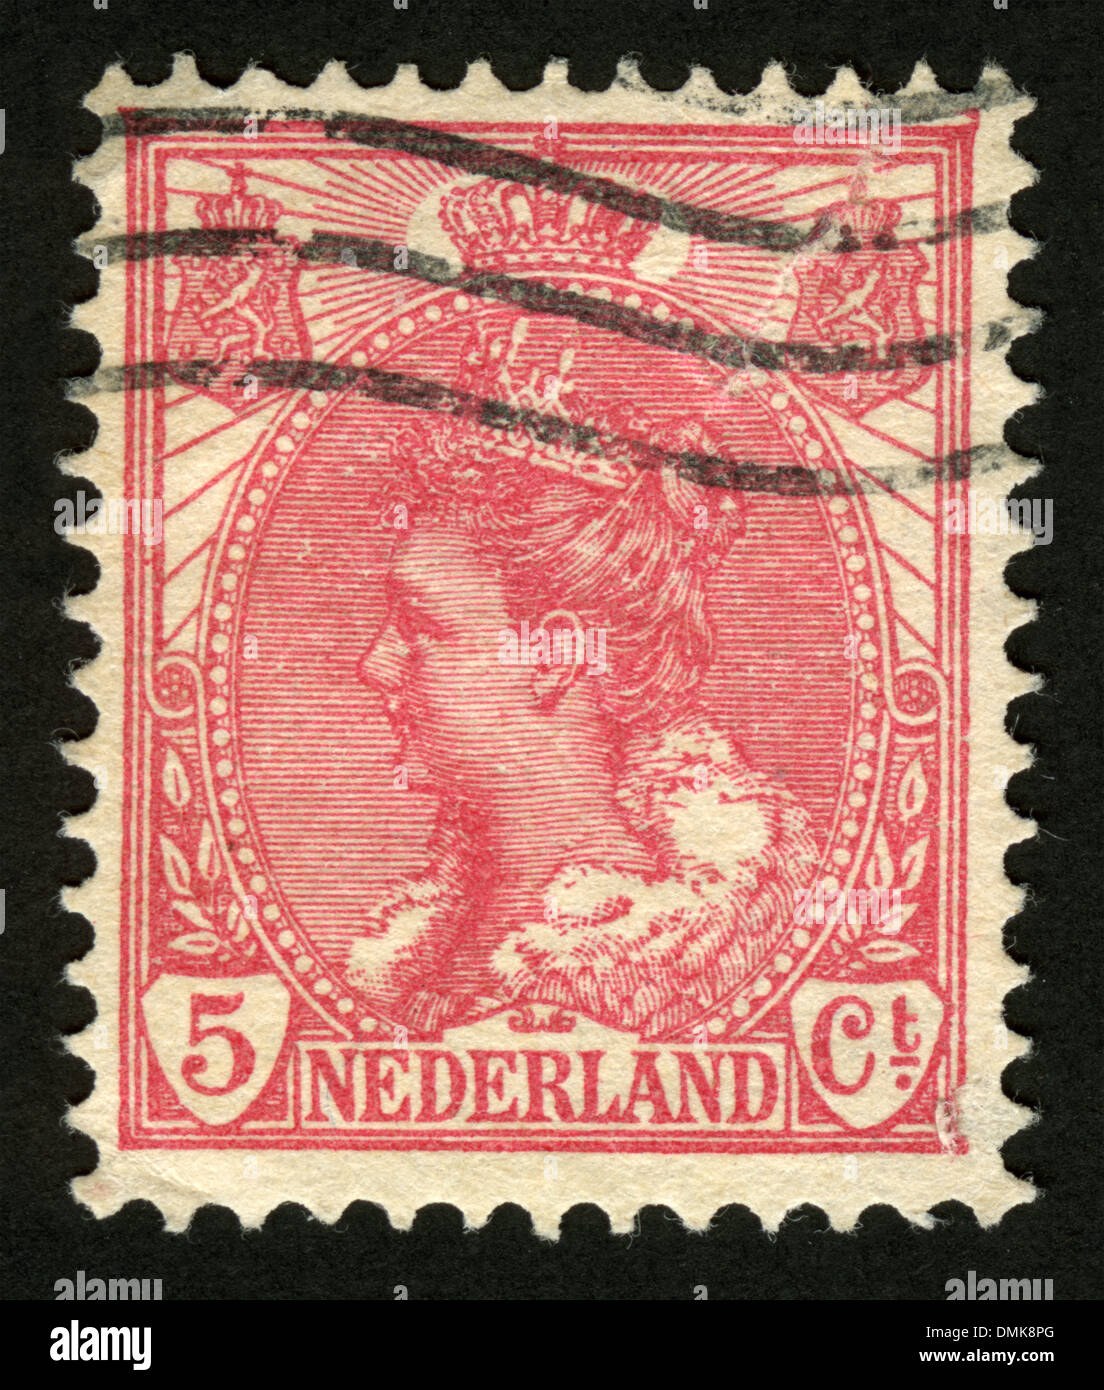 Queen Wilhelmina of the Netherlands (1890-1948), postage stamp, Netherlands Stock Photo